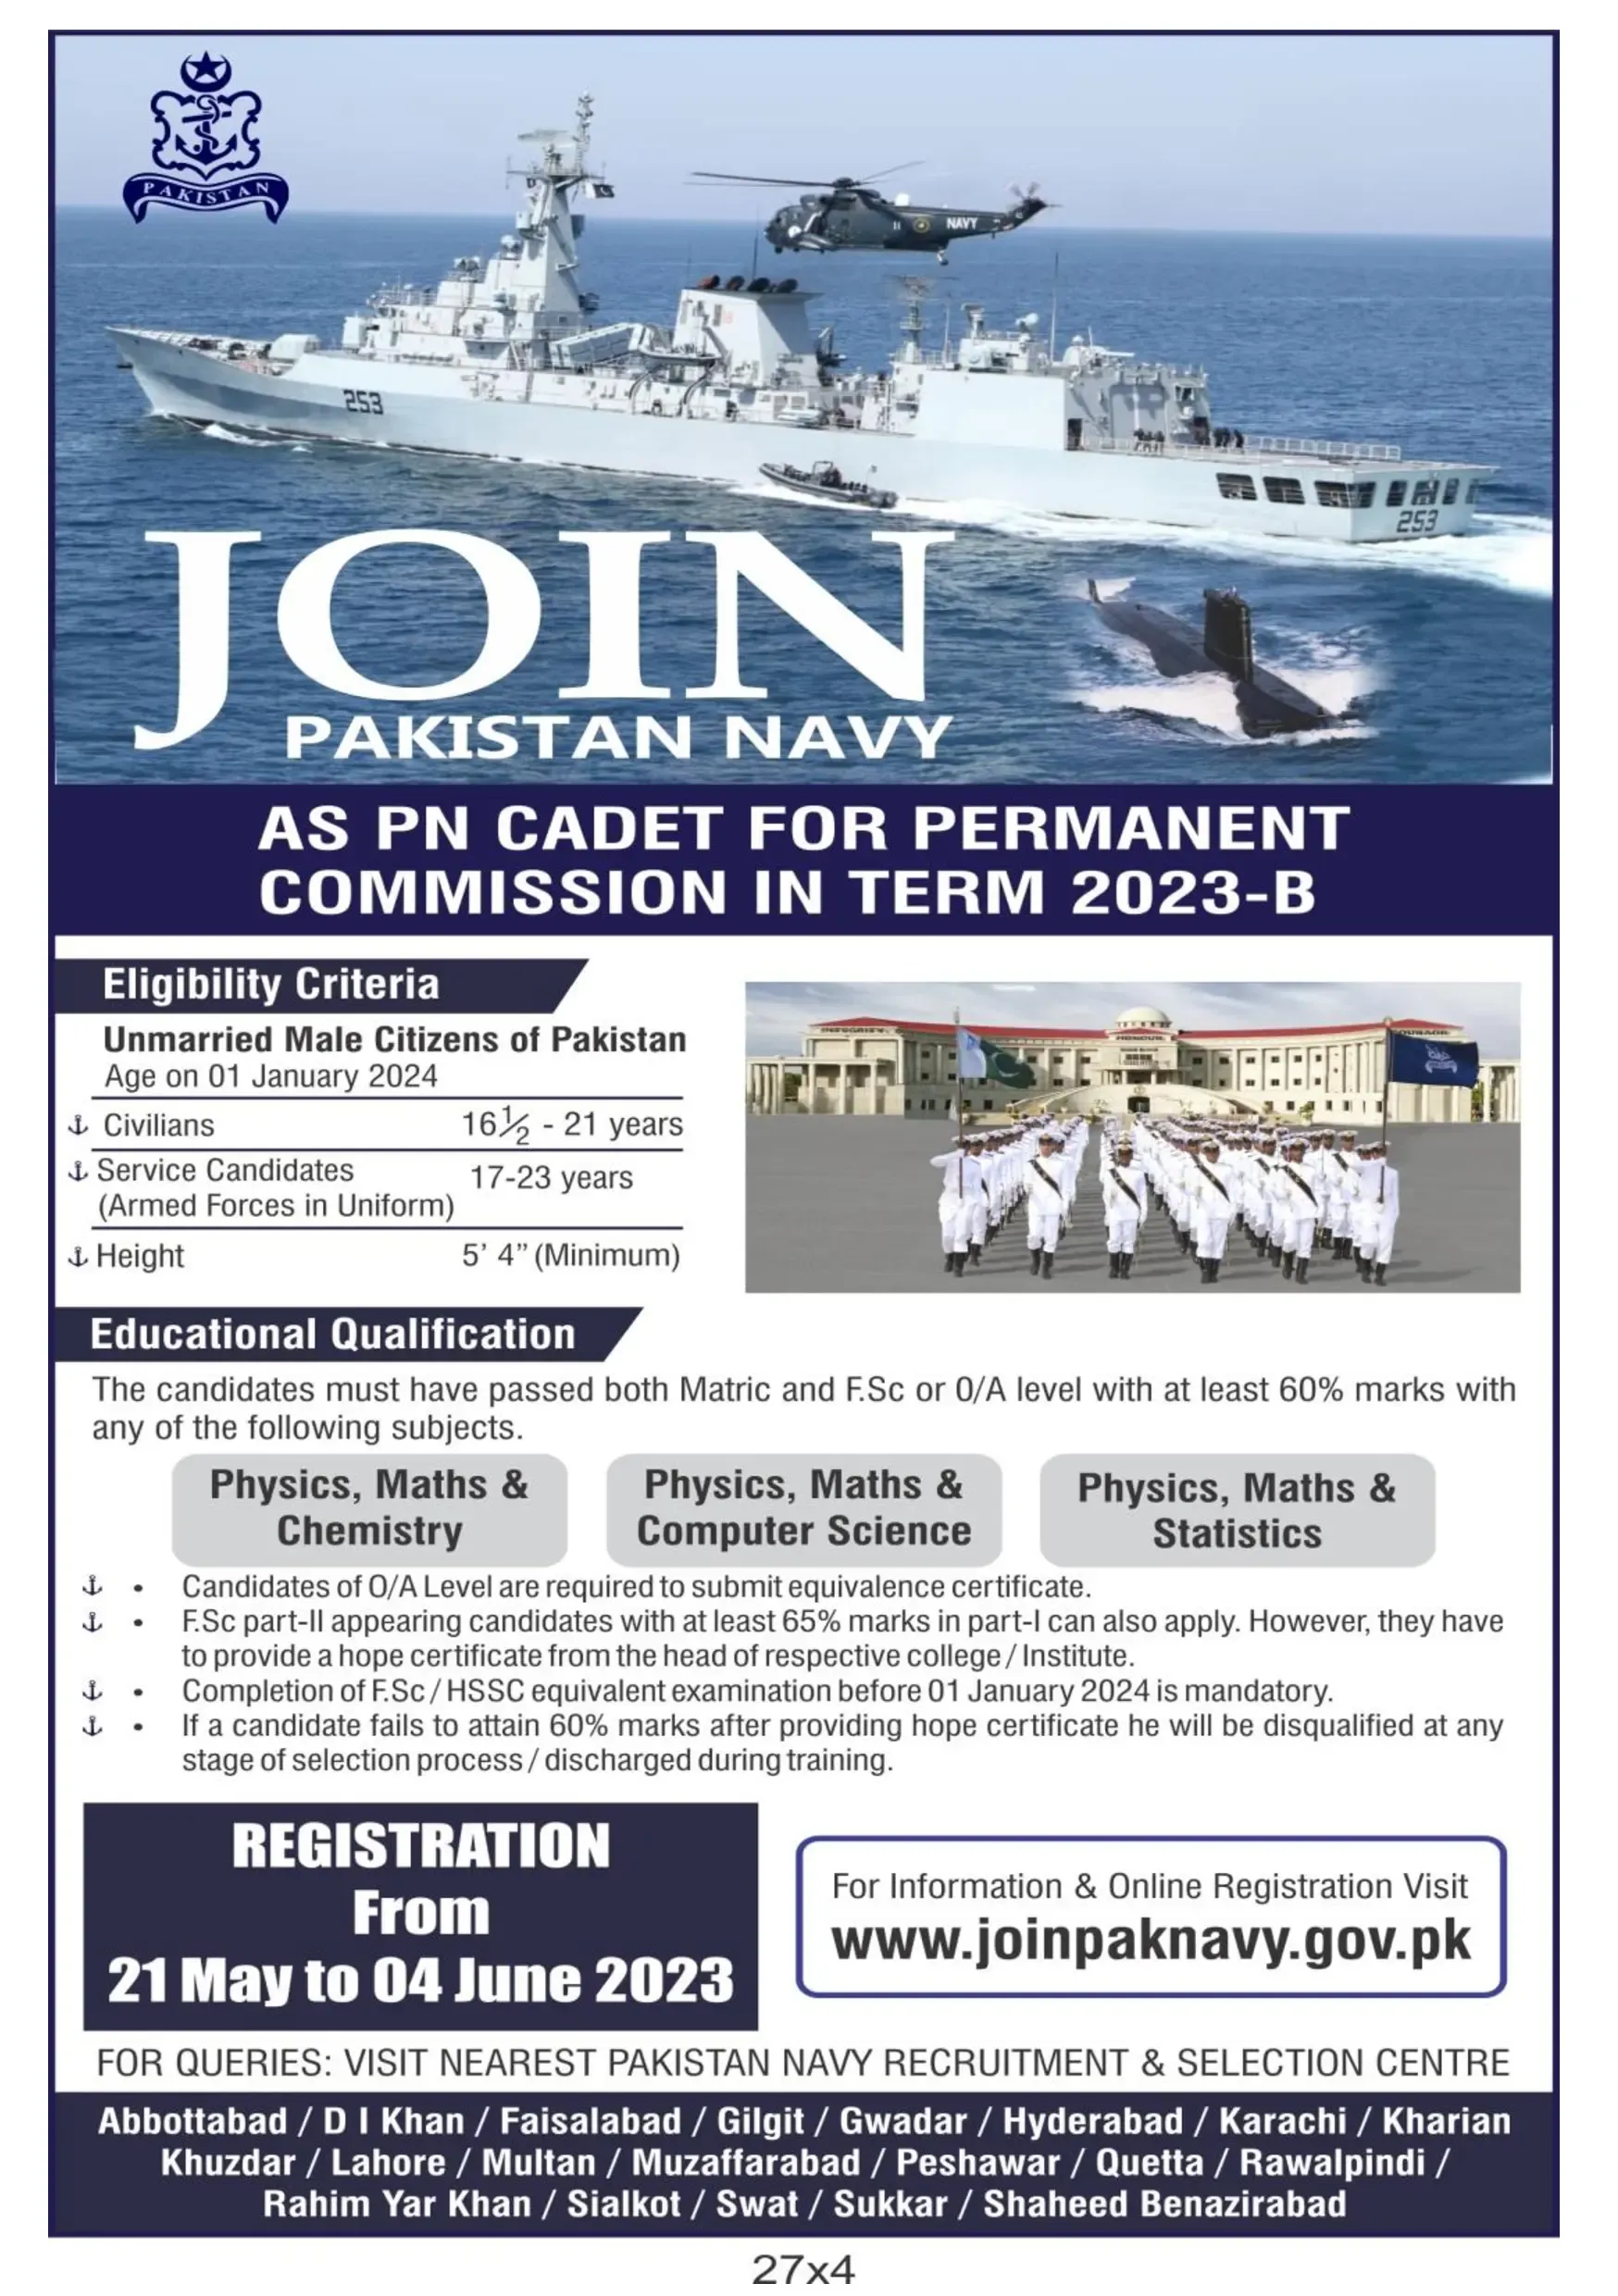 Join Pakistan Navy Jobs 2023 | PN CADET 2023-B | PN CADET Online Registration